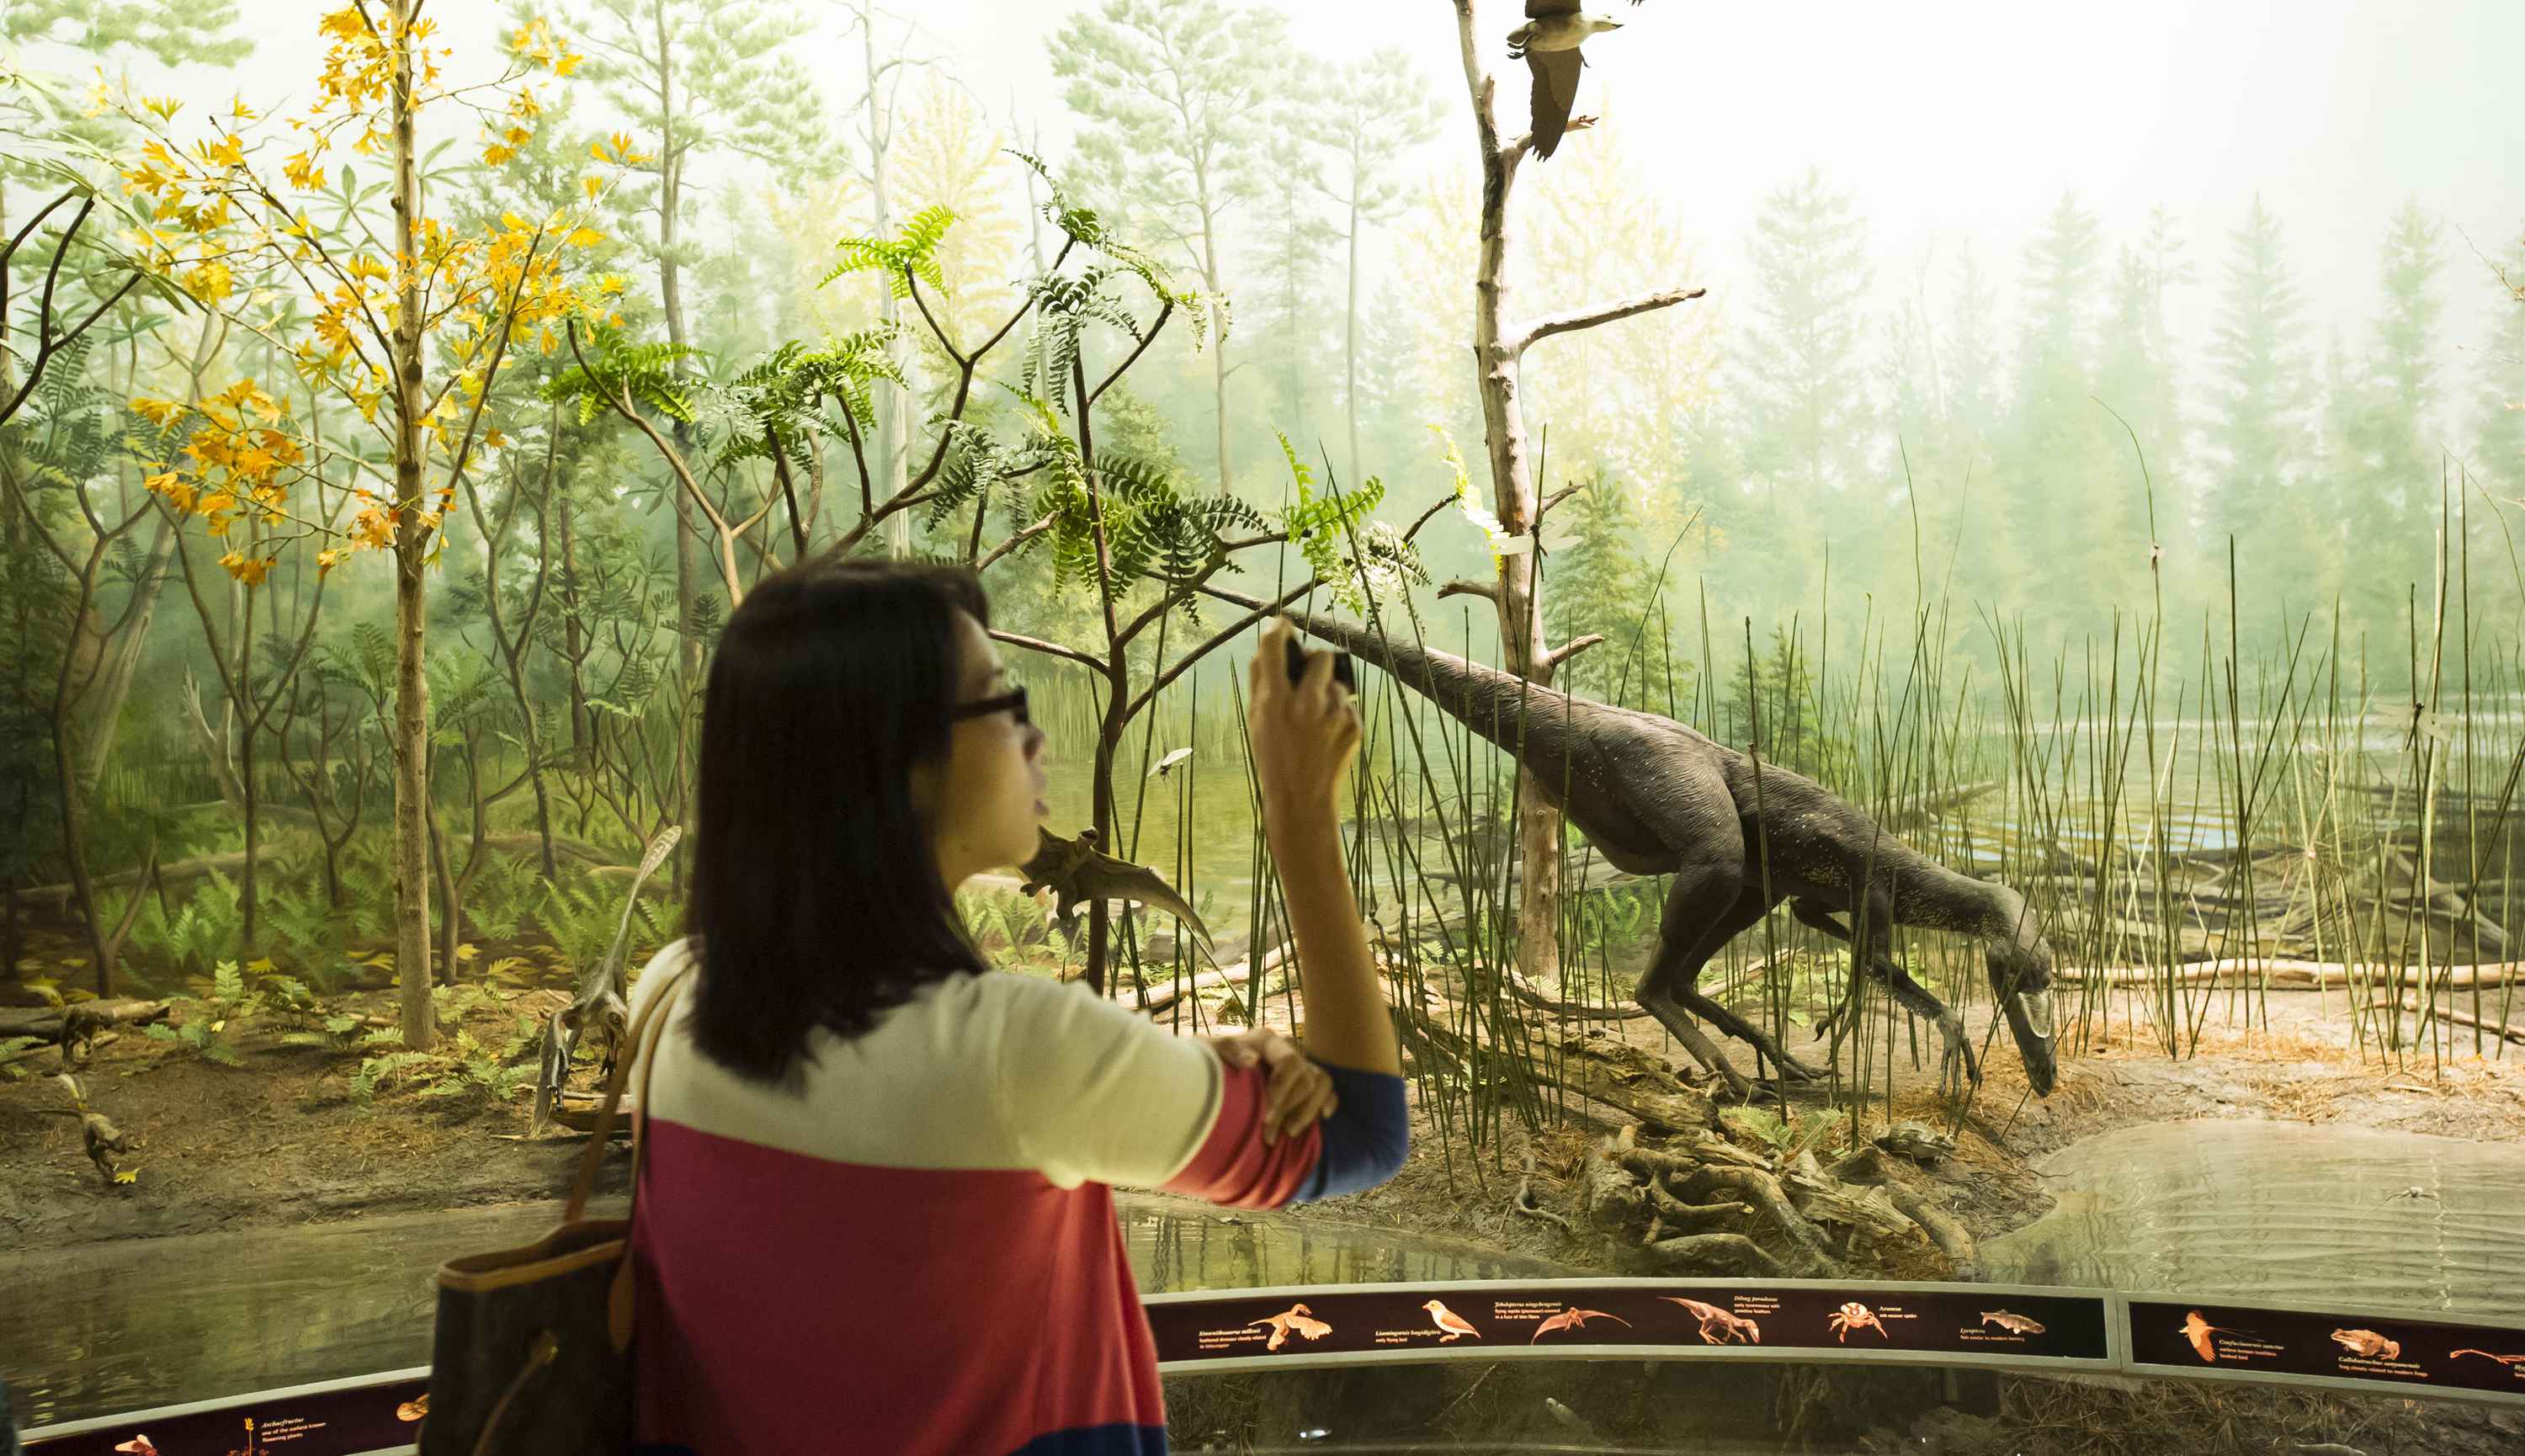 Dinosaurs: Dawn to Extinction Exhibit